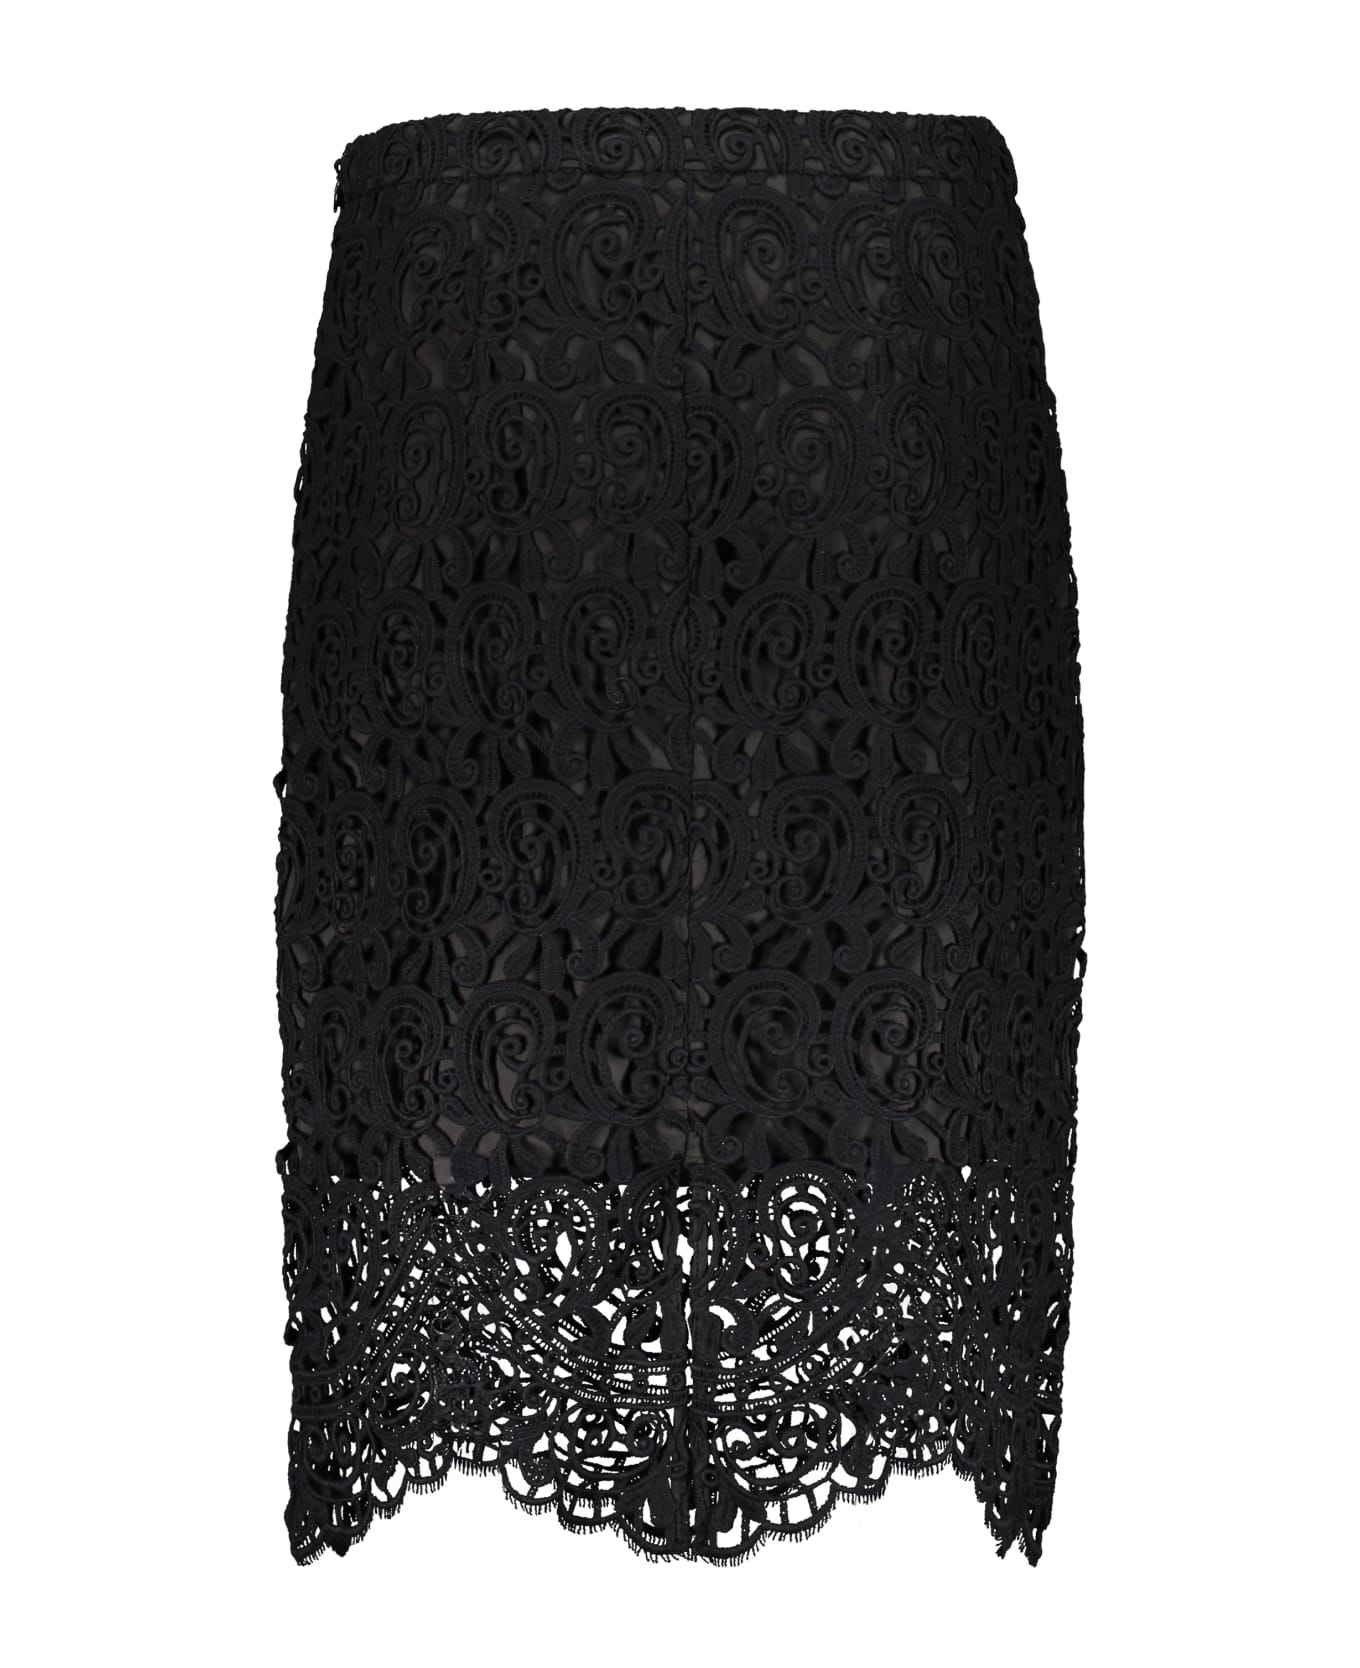 Burberry Lace Skirt - black スカート